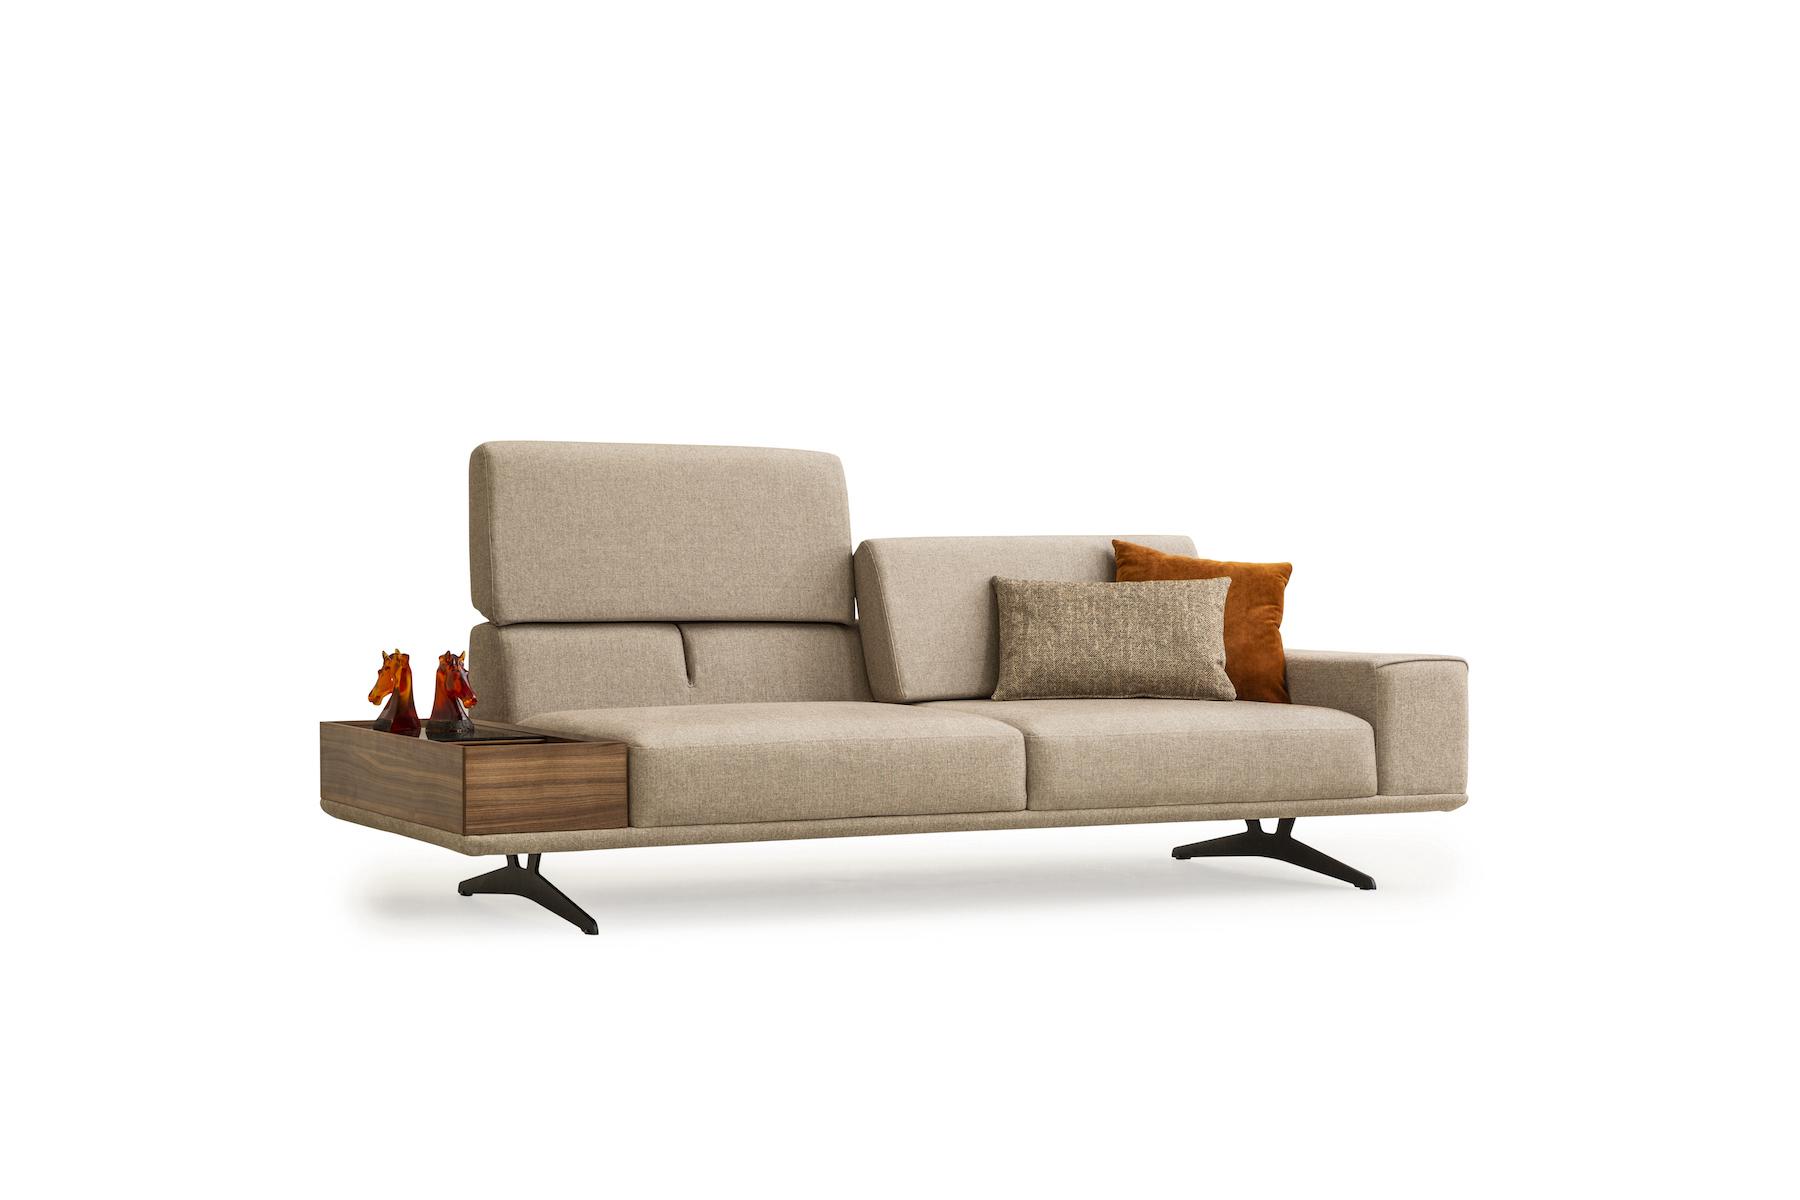 Bono Sofa 1 3707 | Merlo Point | Furniture Store